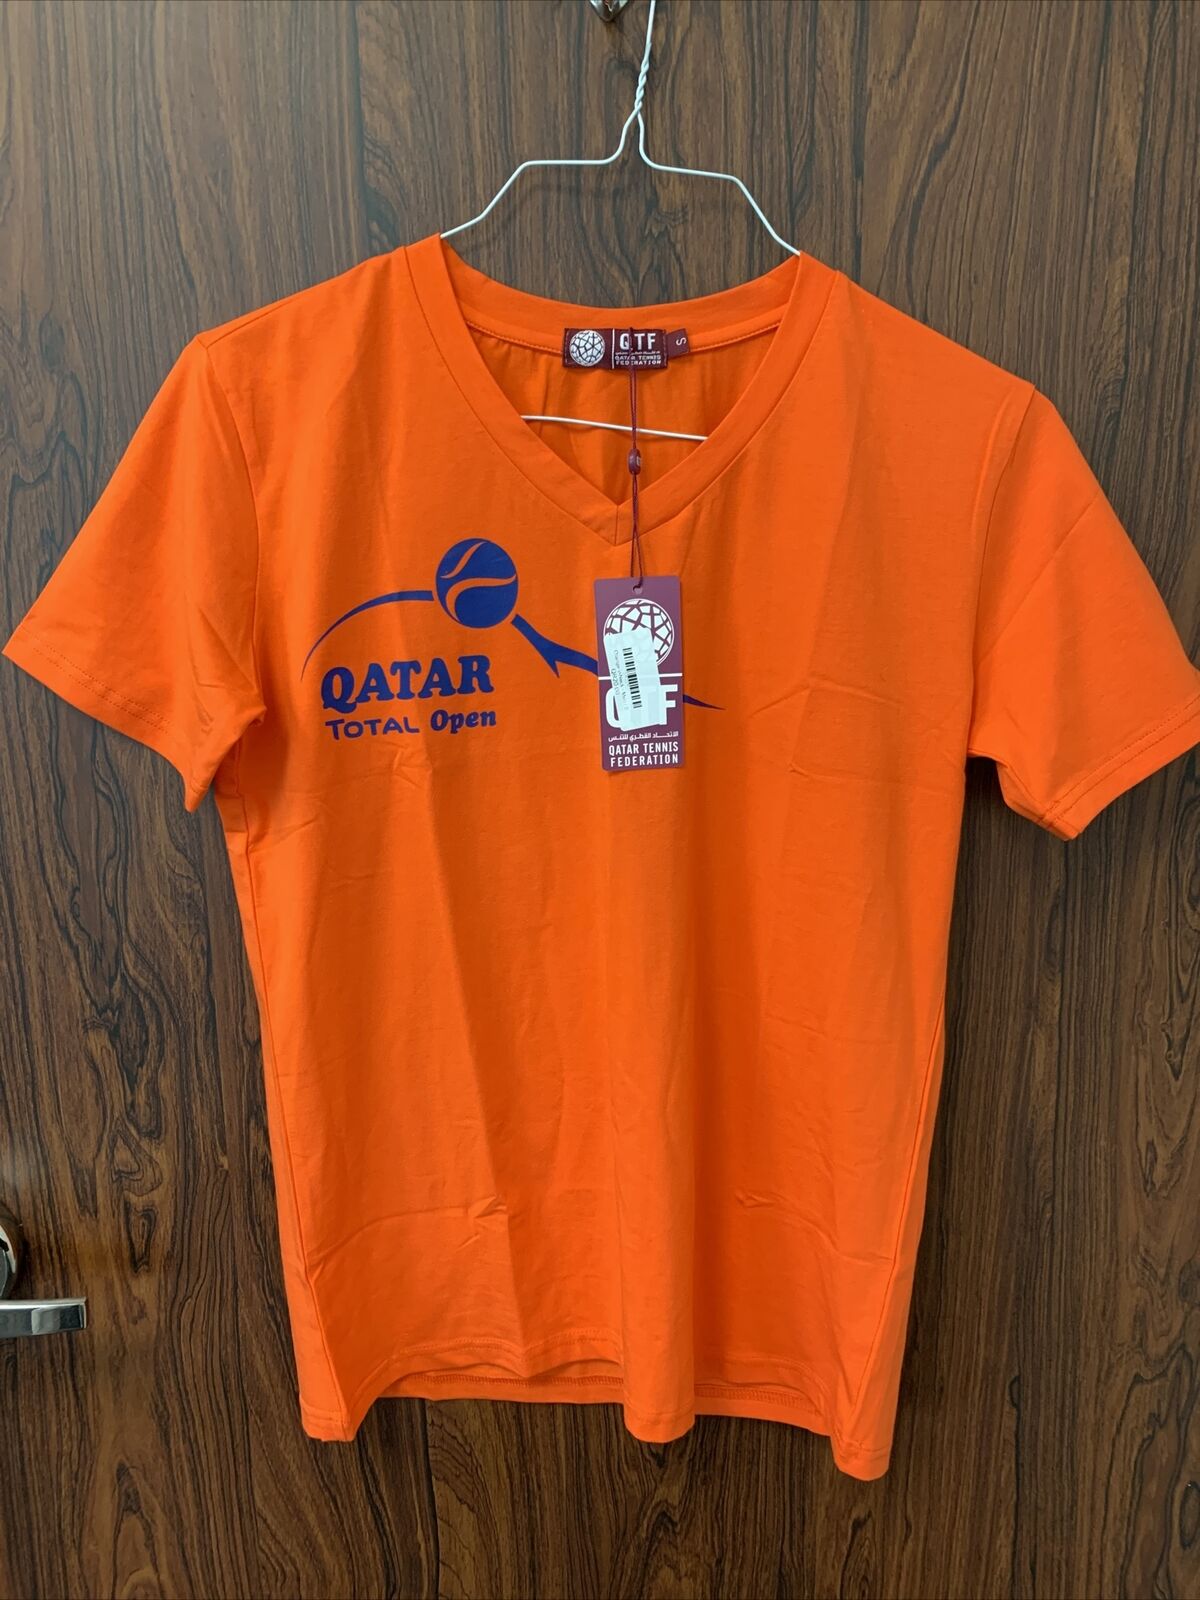 Qatar Tennis Federation T-shirt Size S Total Open Short Sleeves